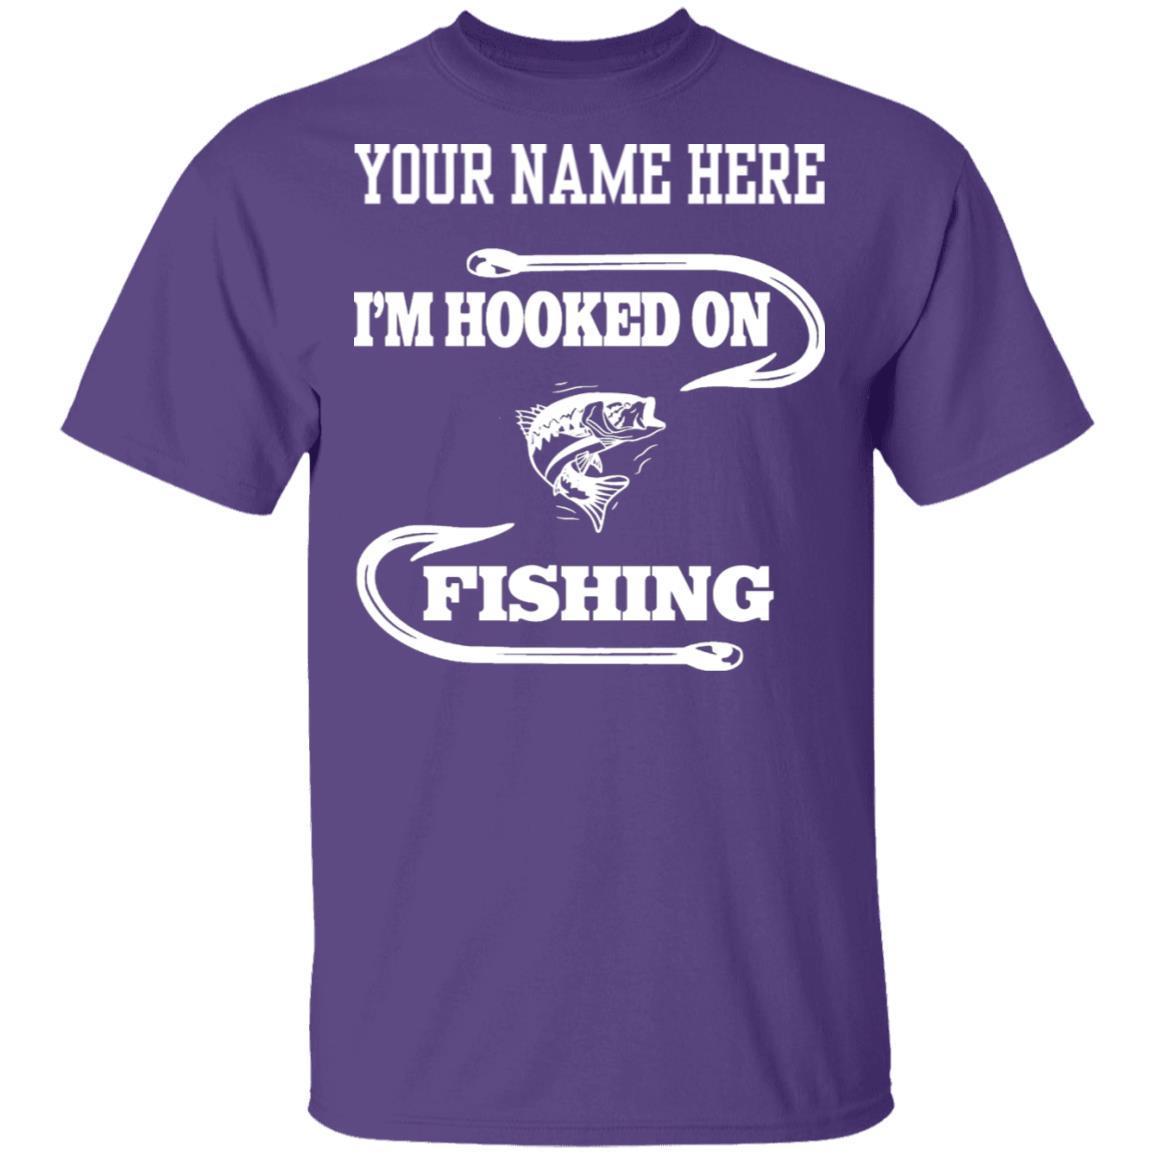 I'm hooked on fishing t-shirt w purple